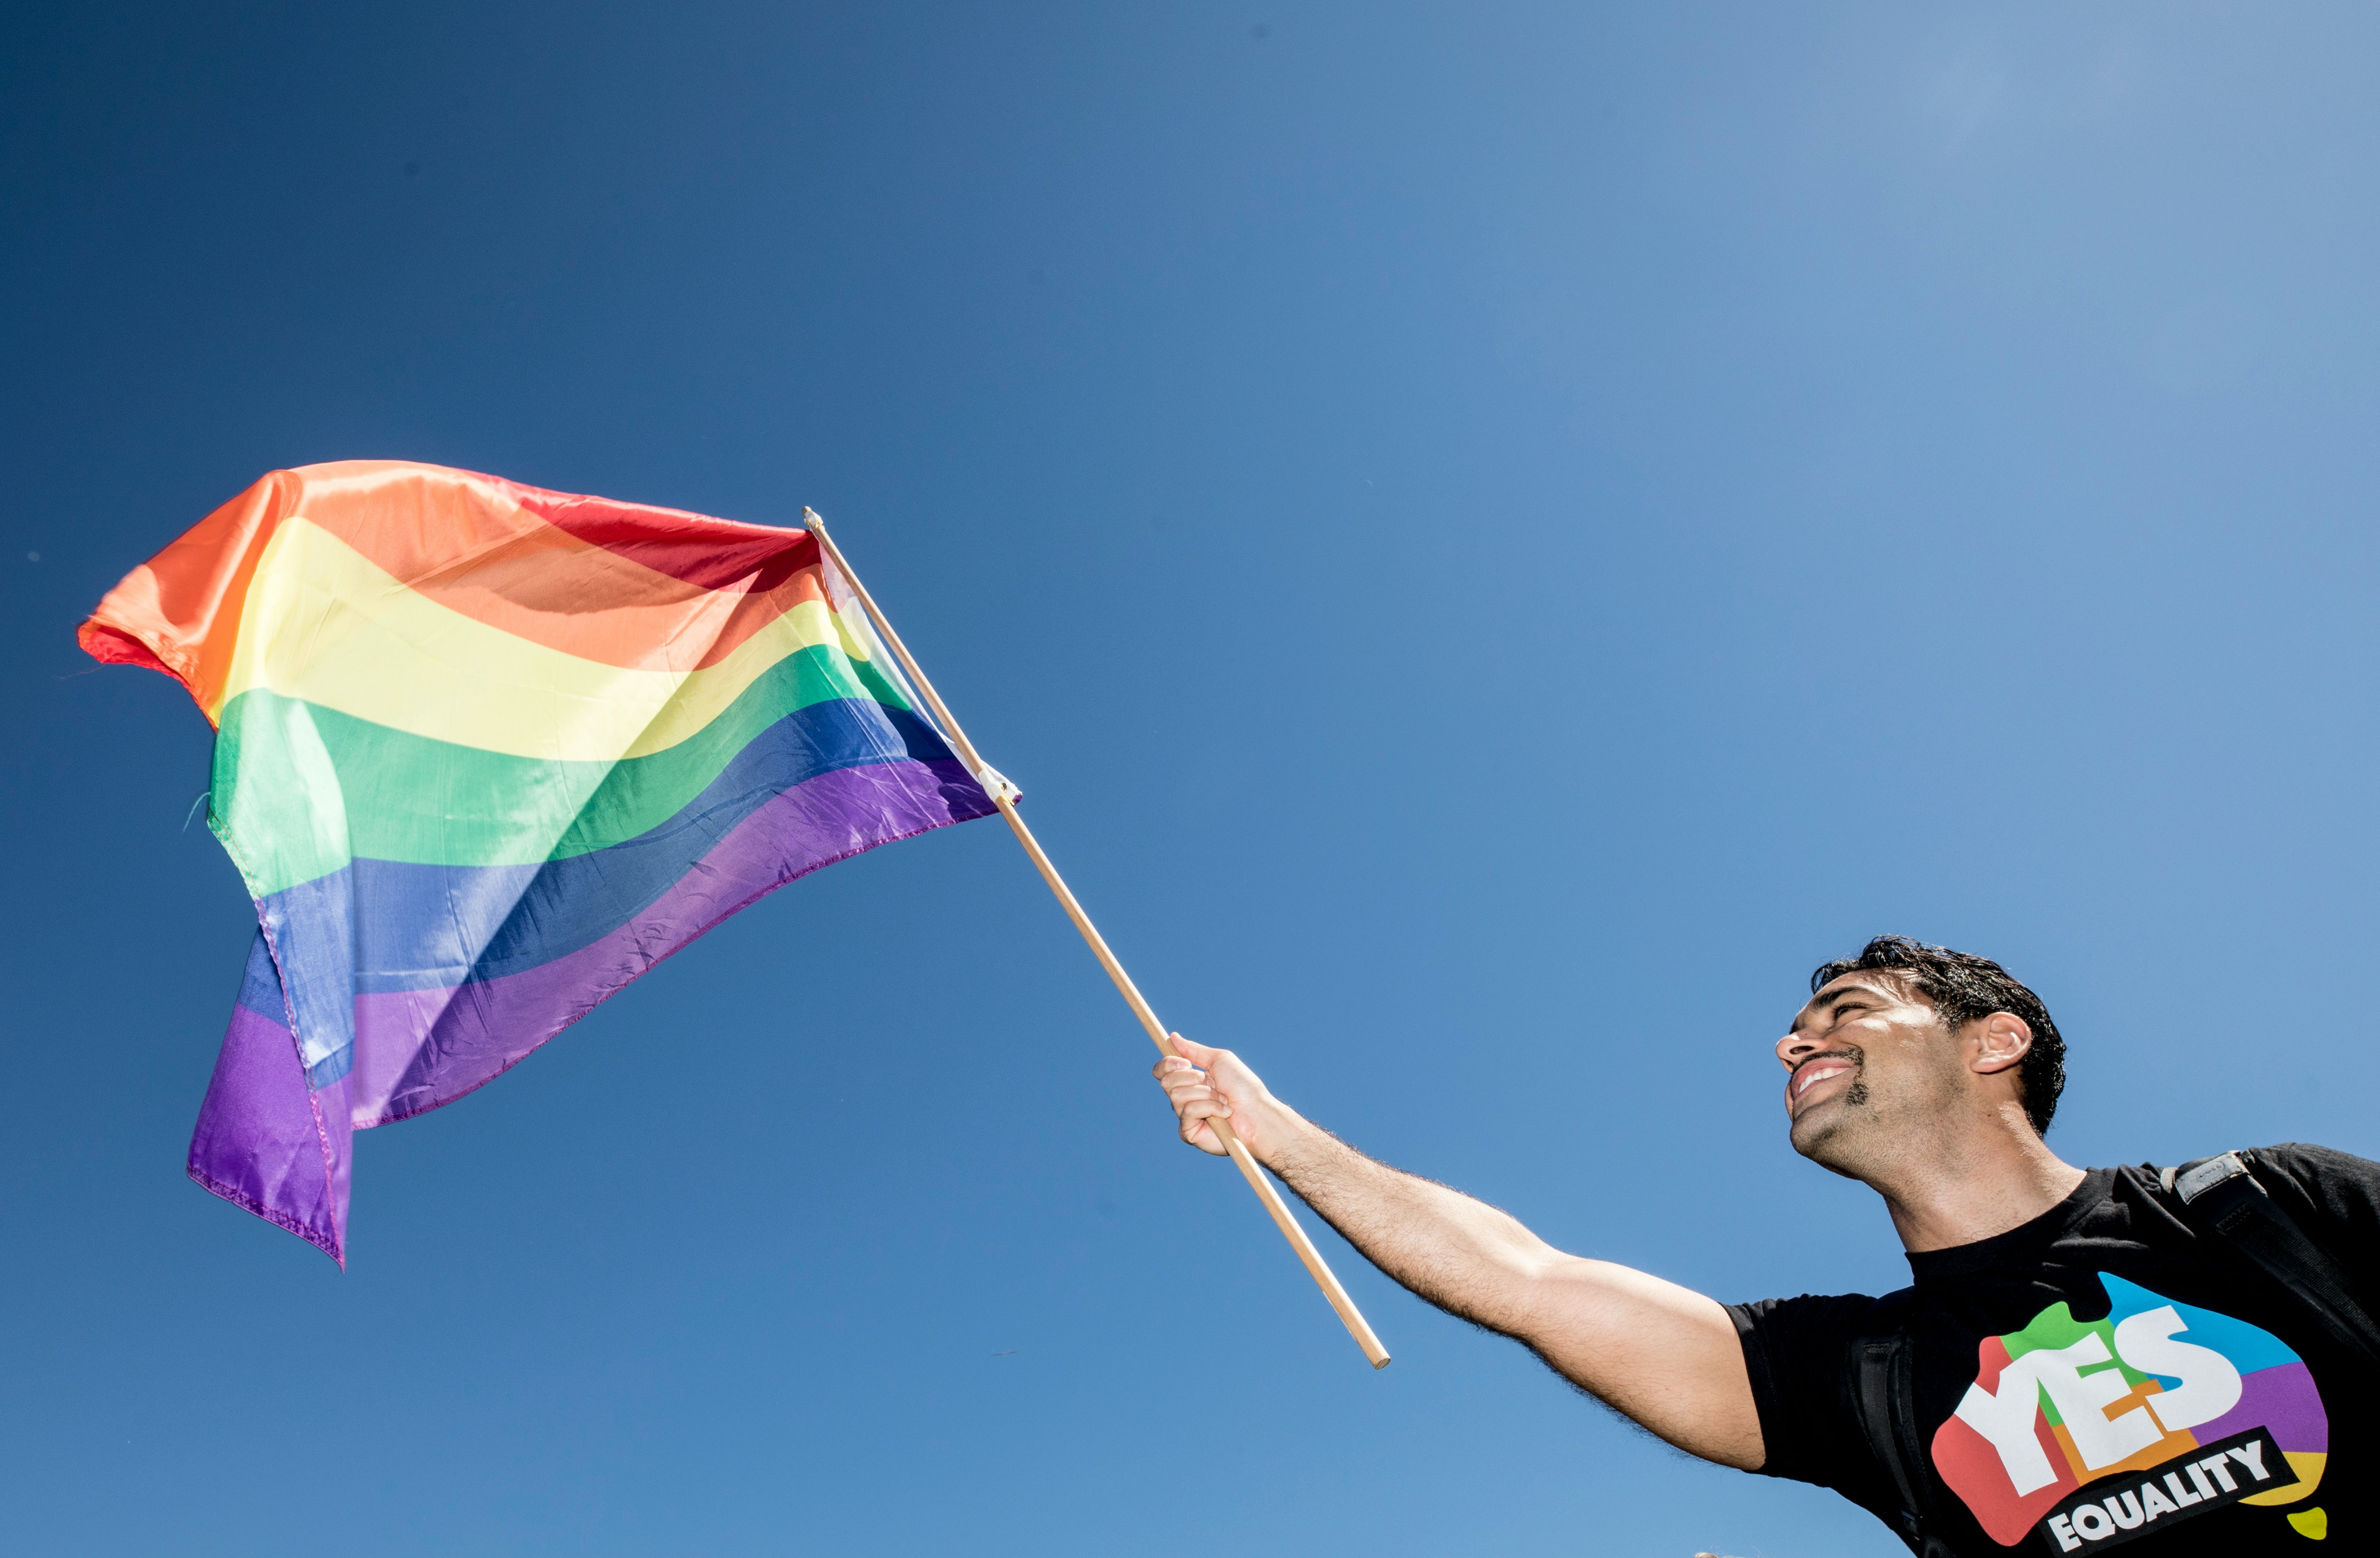 android gay pride flag emoji